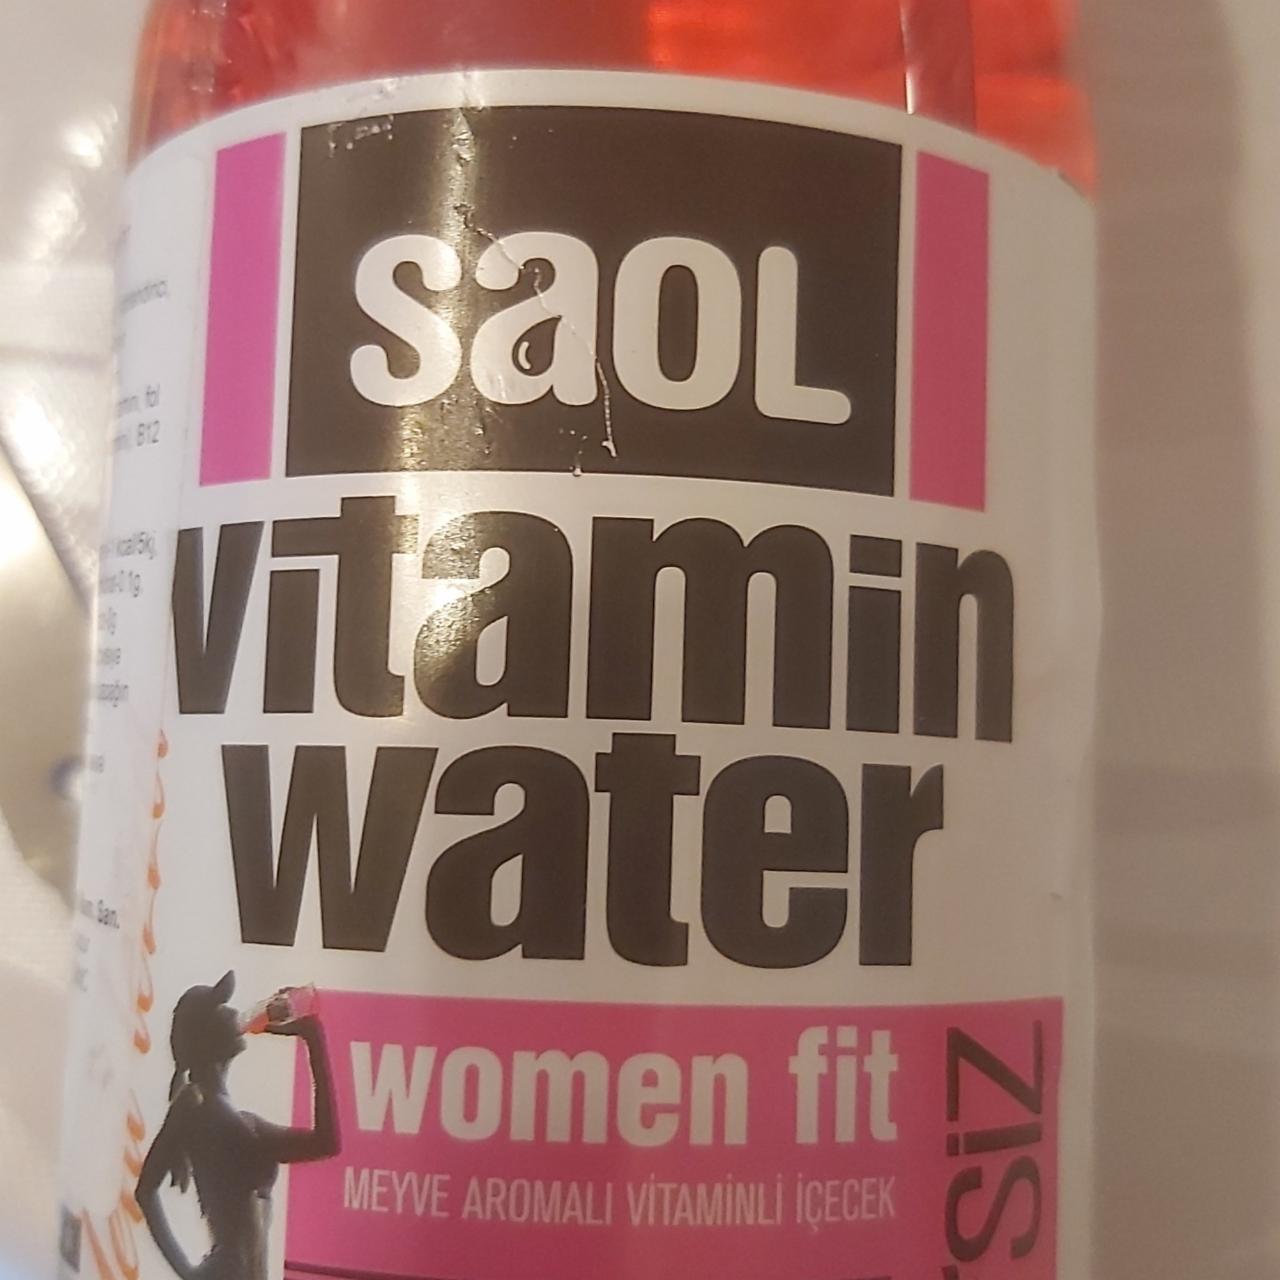 Фото - Vitamin water woman fit Saol